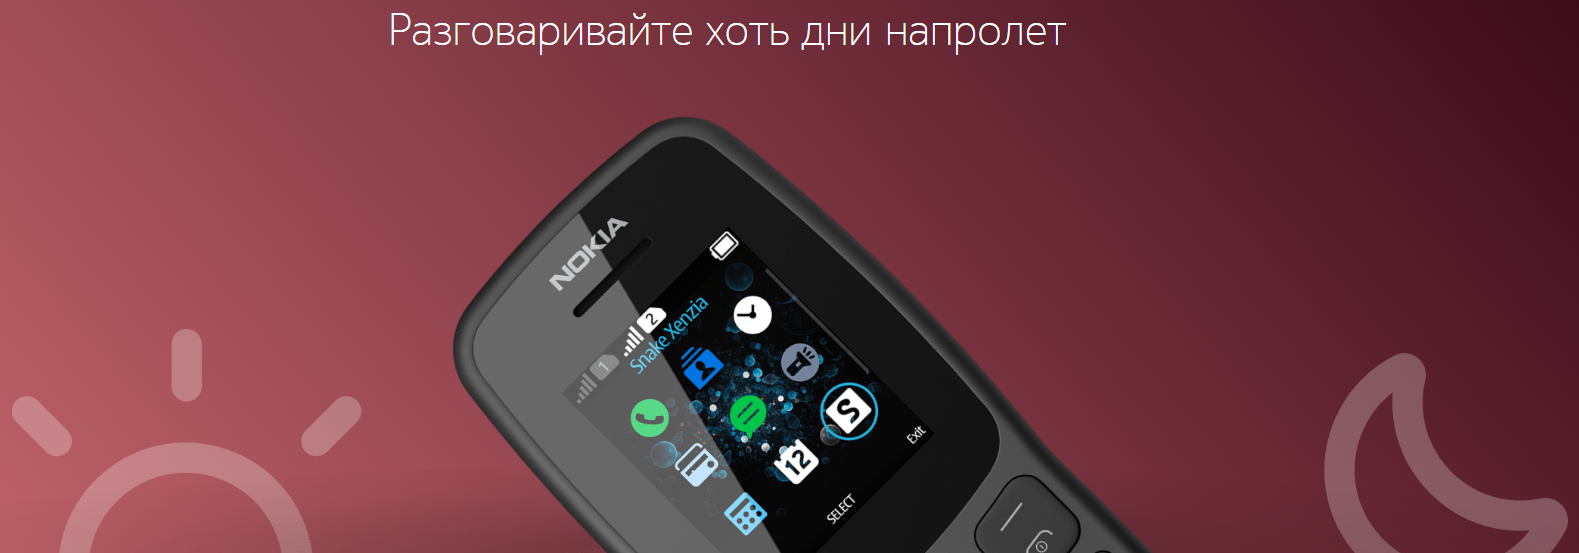 Nokia 106 Dual Sim New 1)